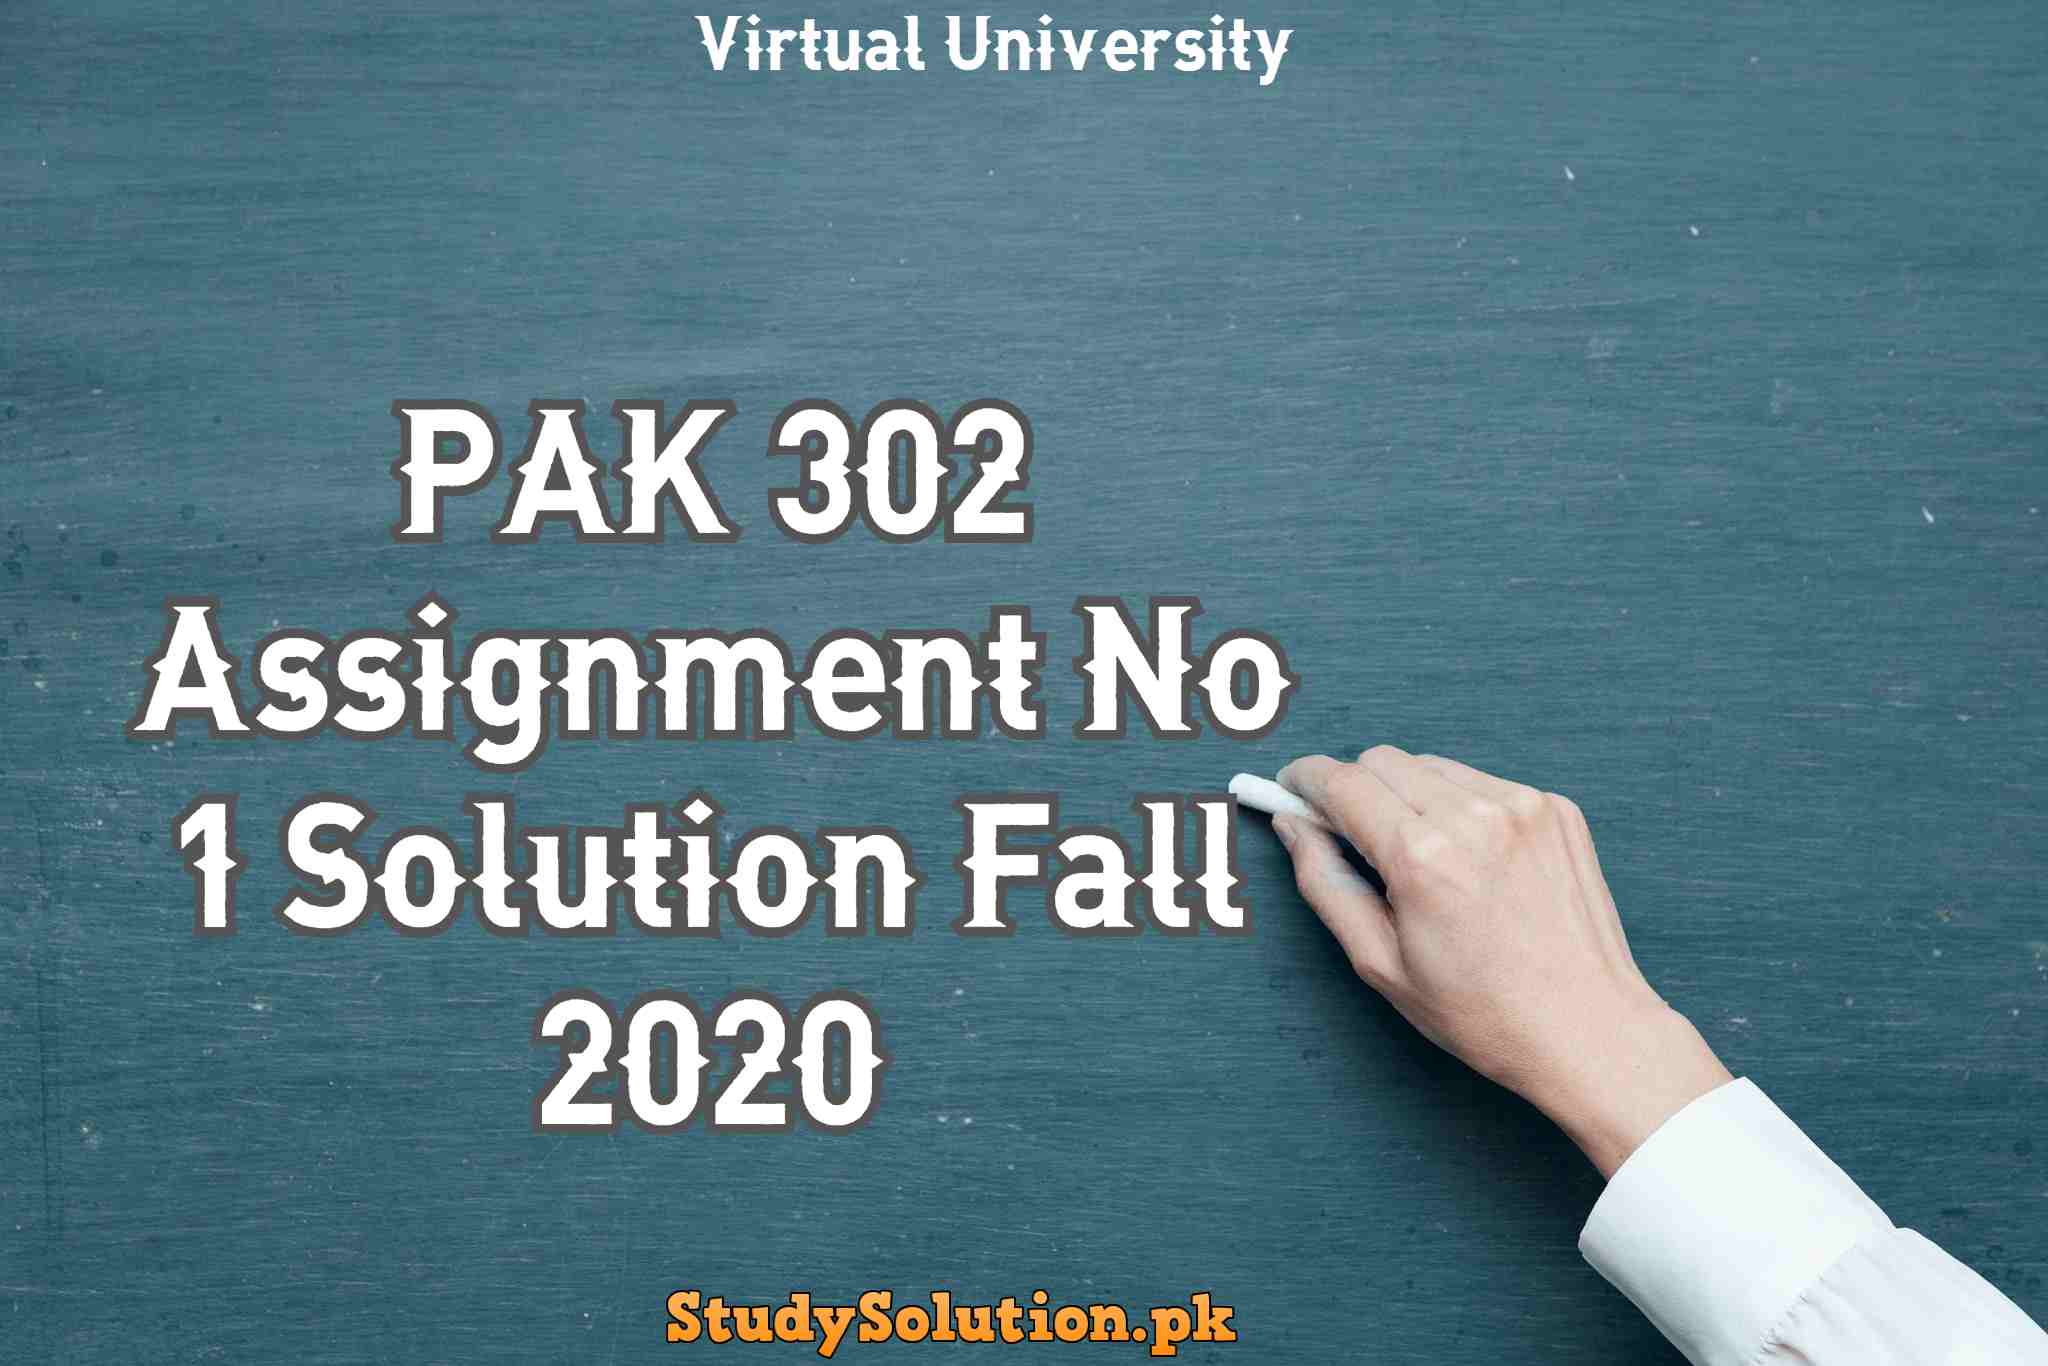 PAK 302 Assignment No 1 Solution Fall 2020